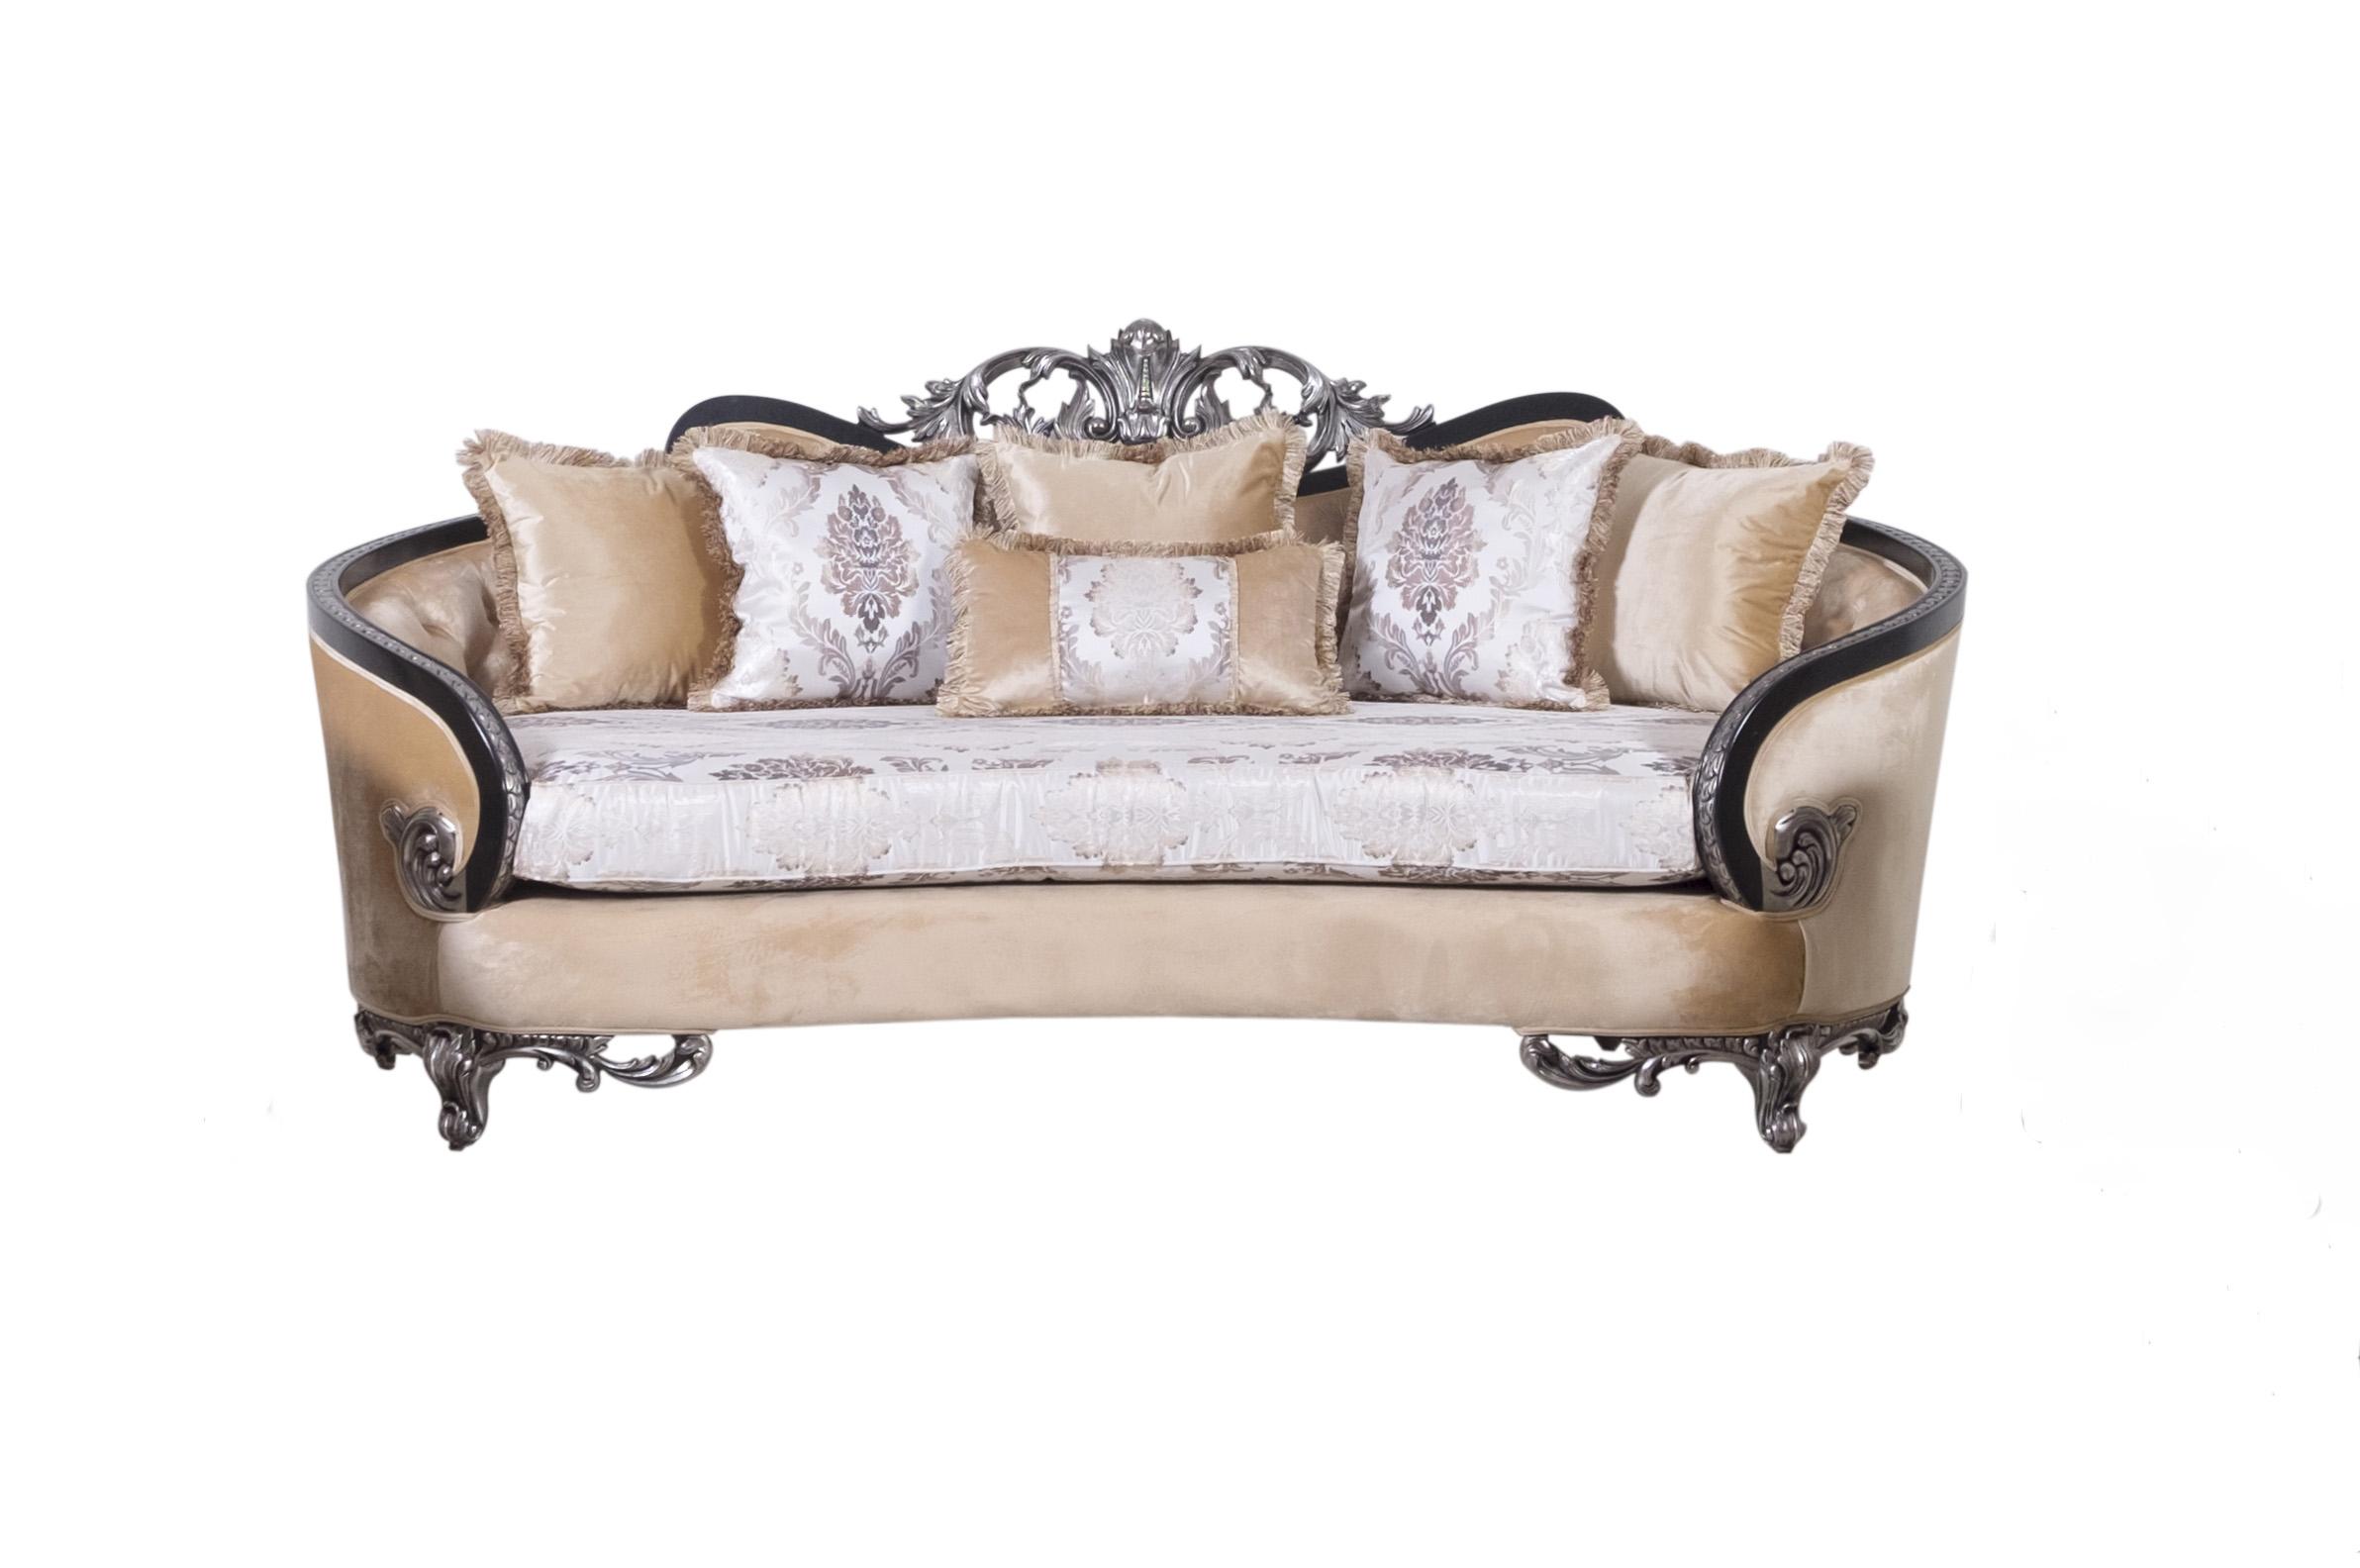 Classic, Traditional Sofa ROSABELLA 35022-S in Antique, Silver, Black Fabric